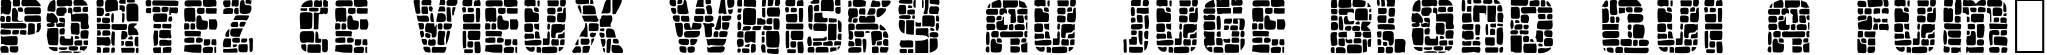 Пример написания шрифтом Dungeon Blocks Filled текста на французском